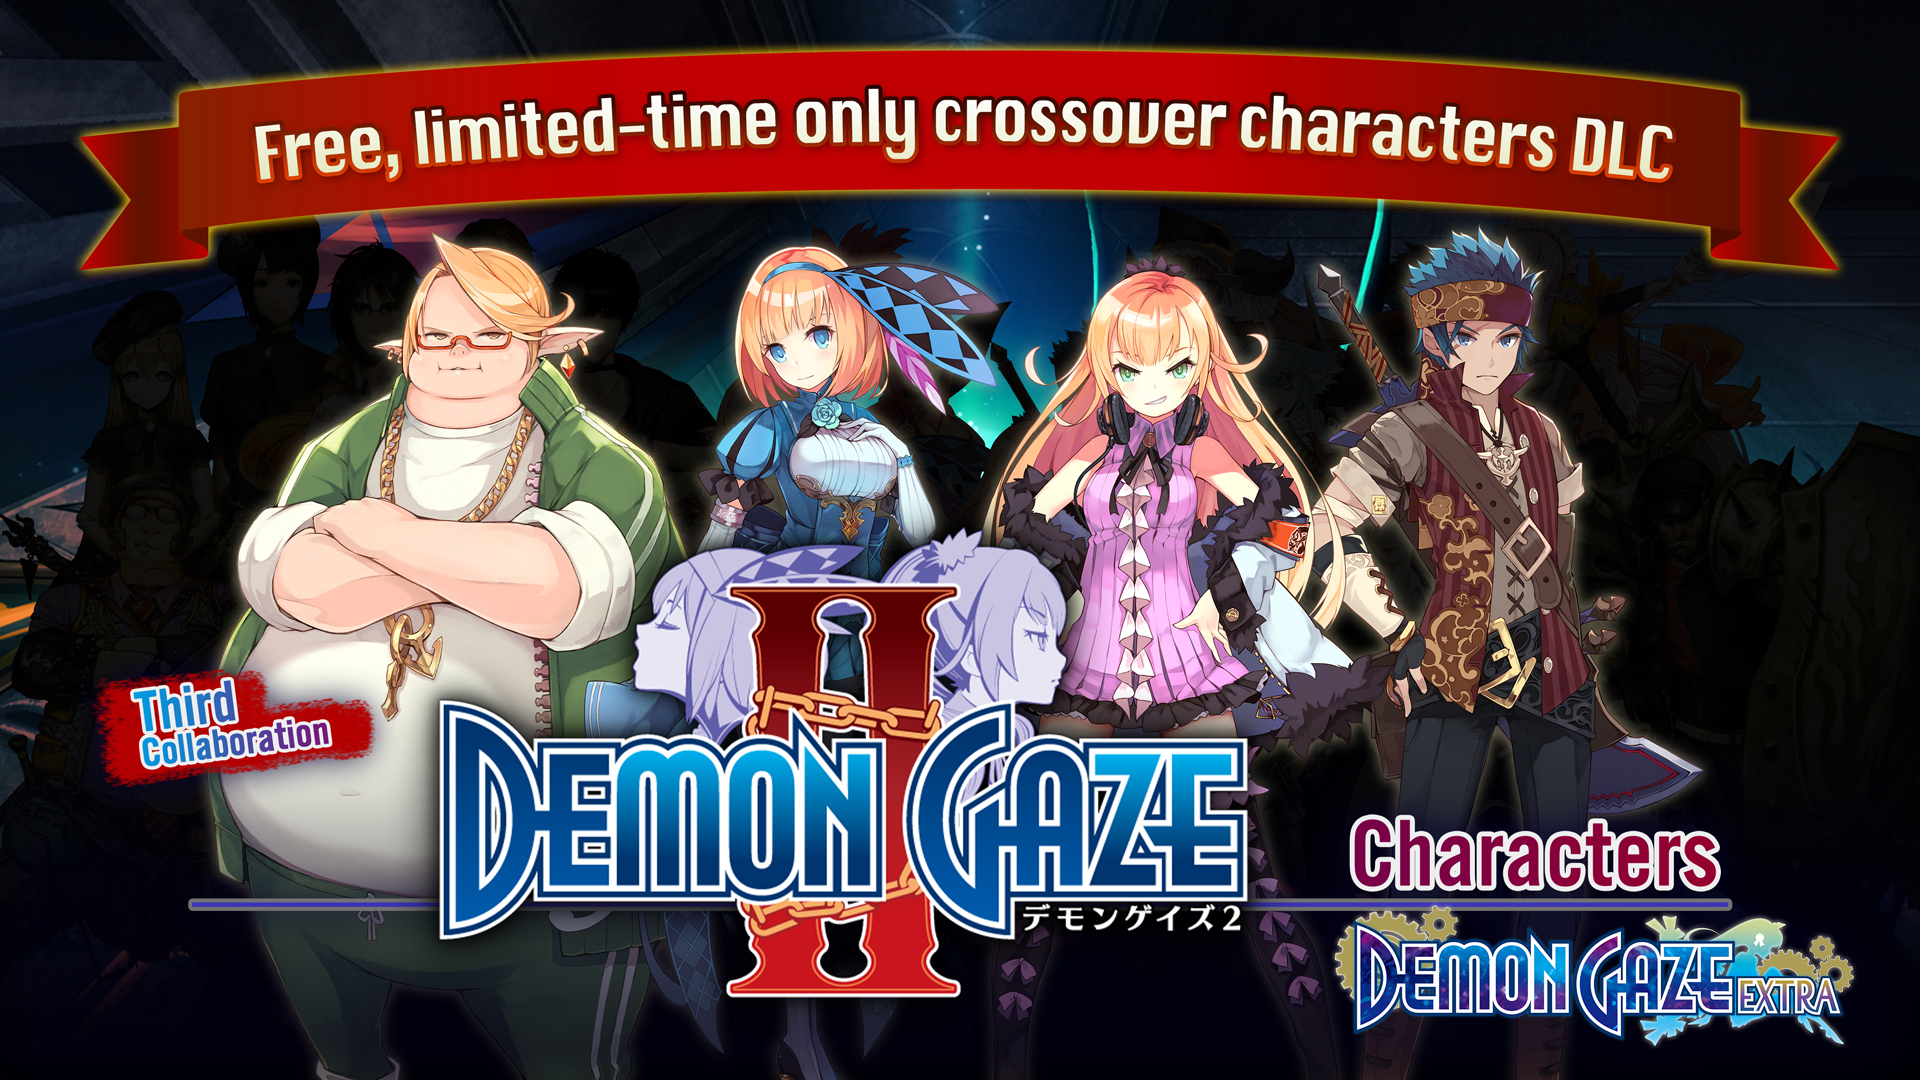 Third Collaboration: Demon Gaze 2 Characters